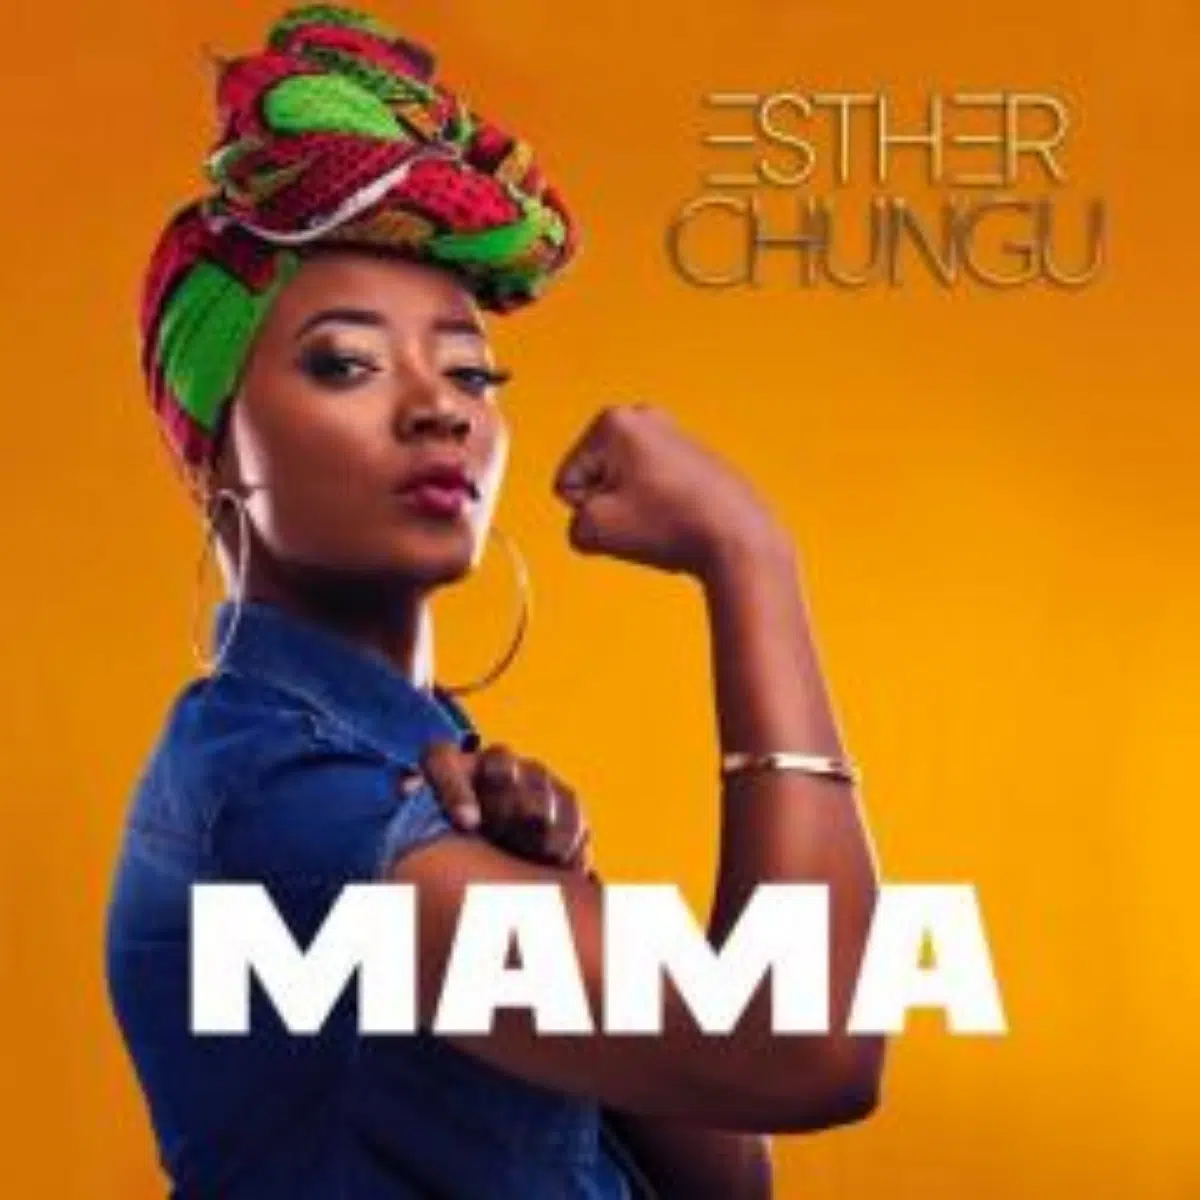 DOWNLOAD: Esther Chungu – “Mama” Mp3